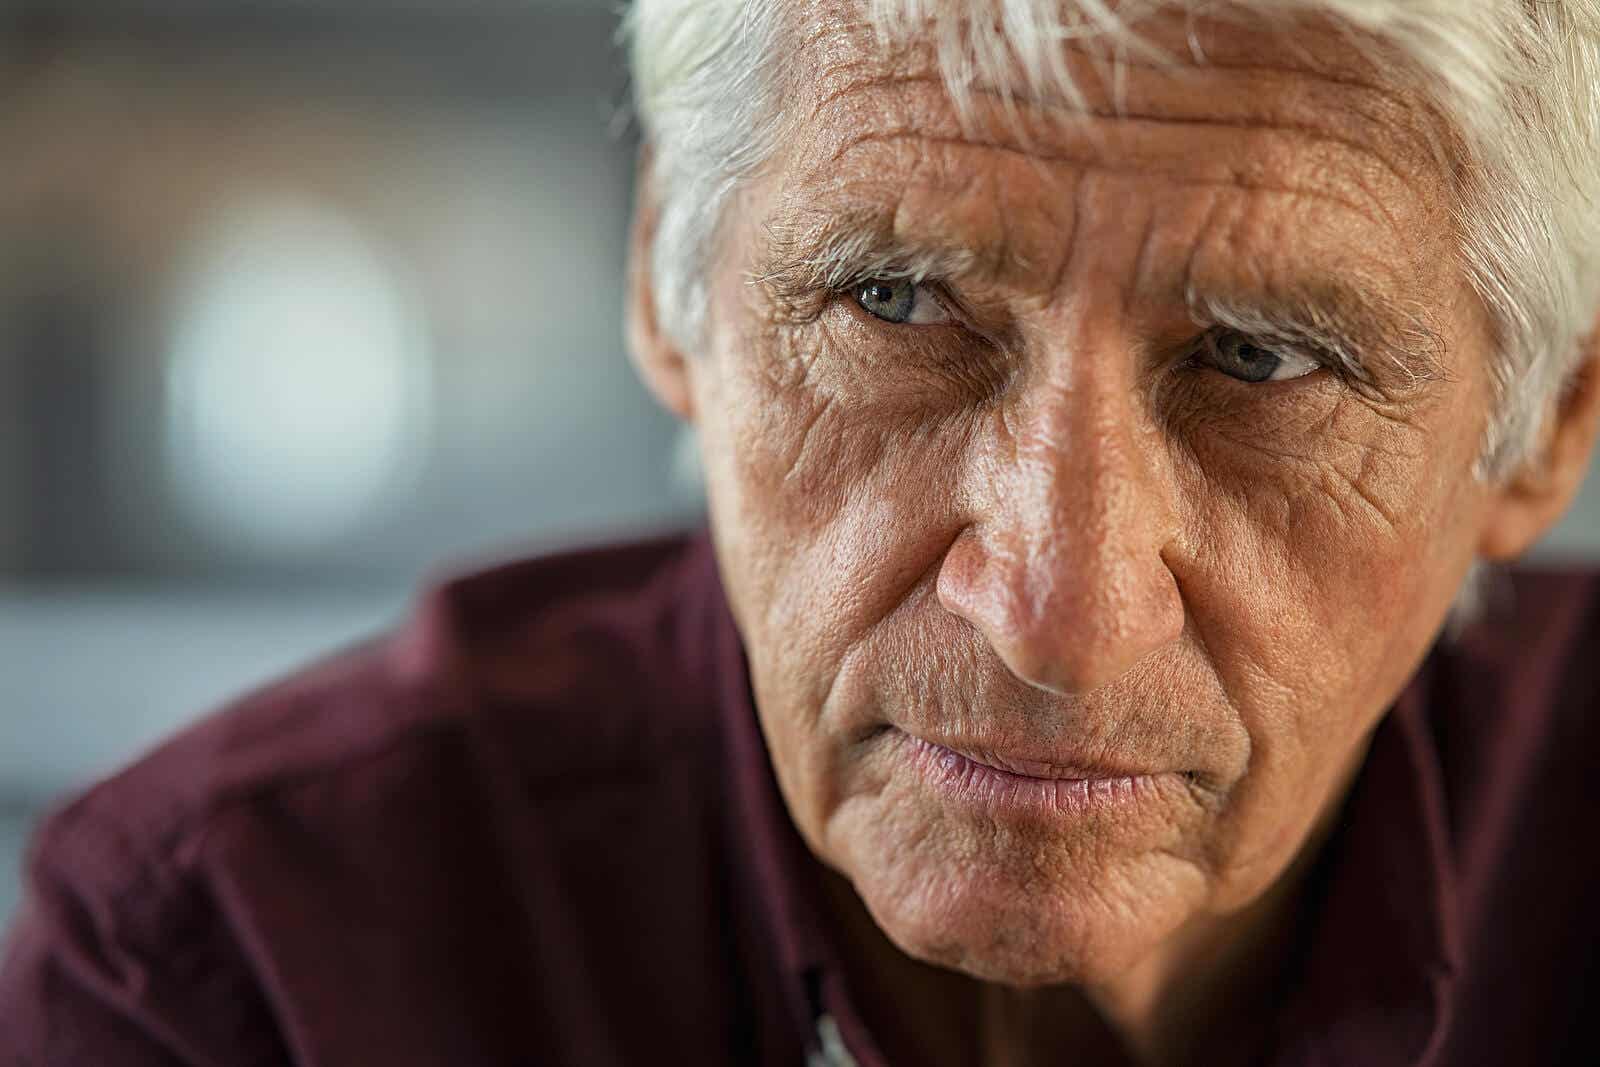 A man with Alzheimer's disease